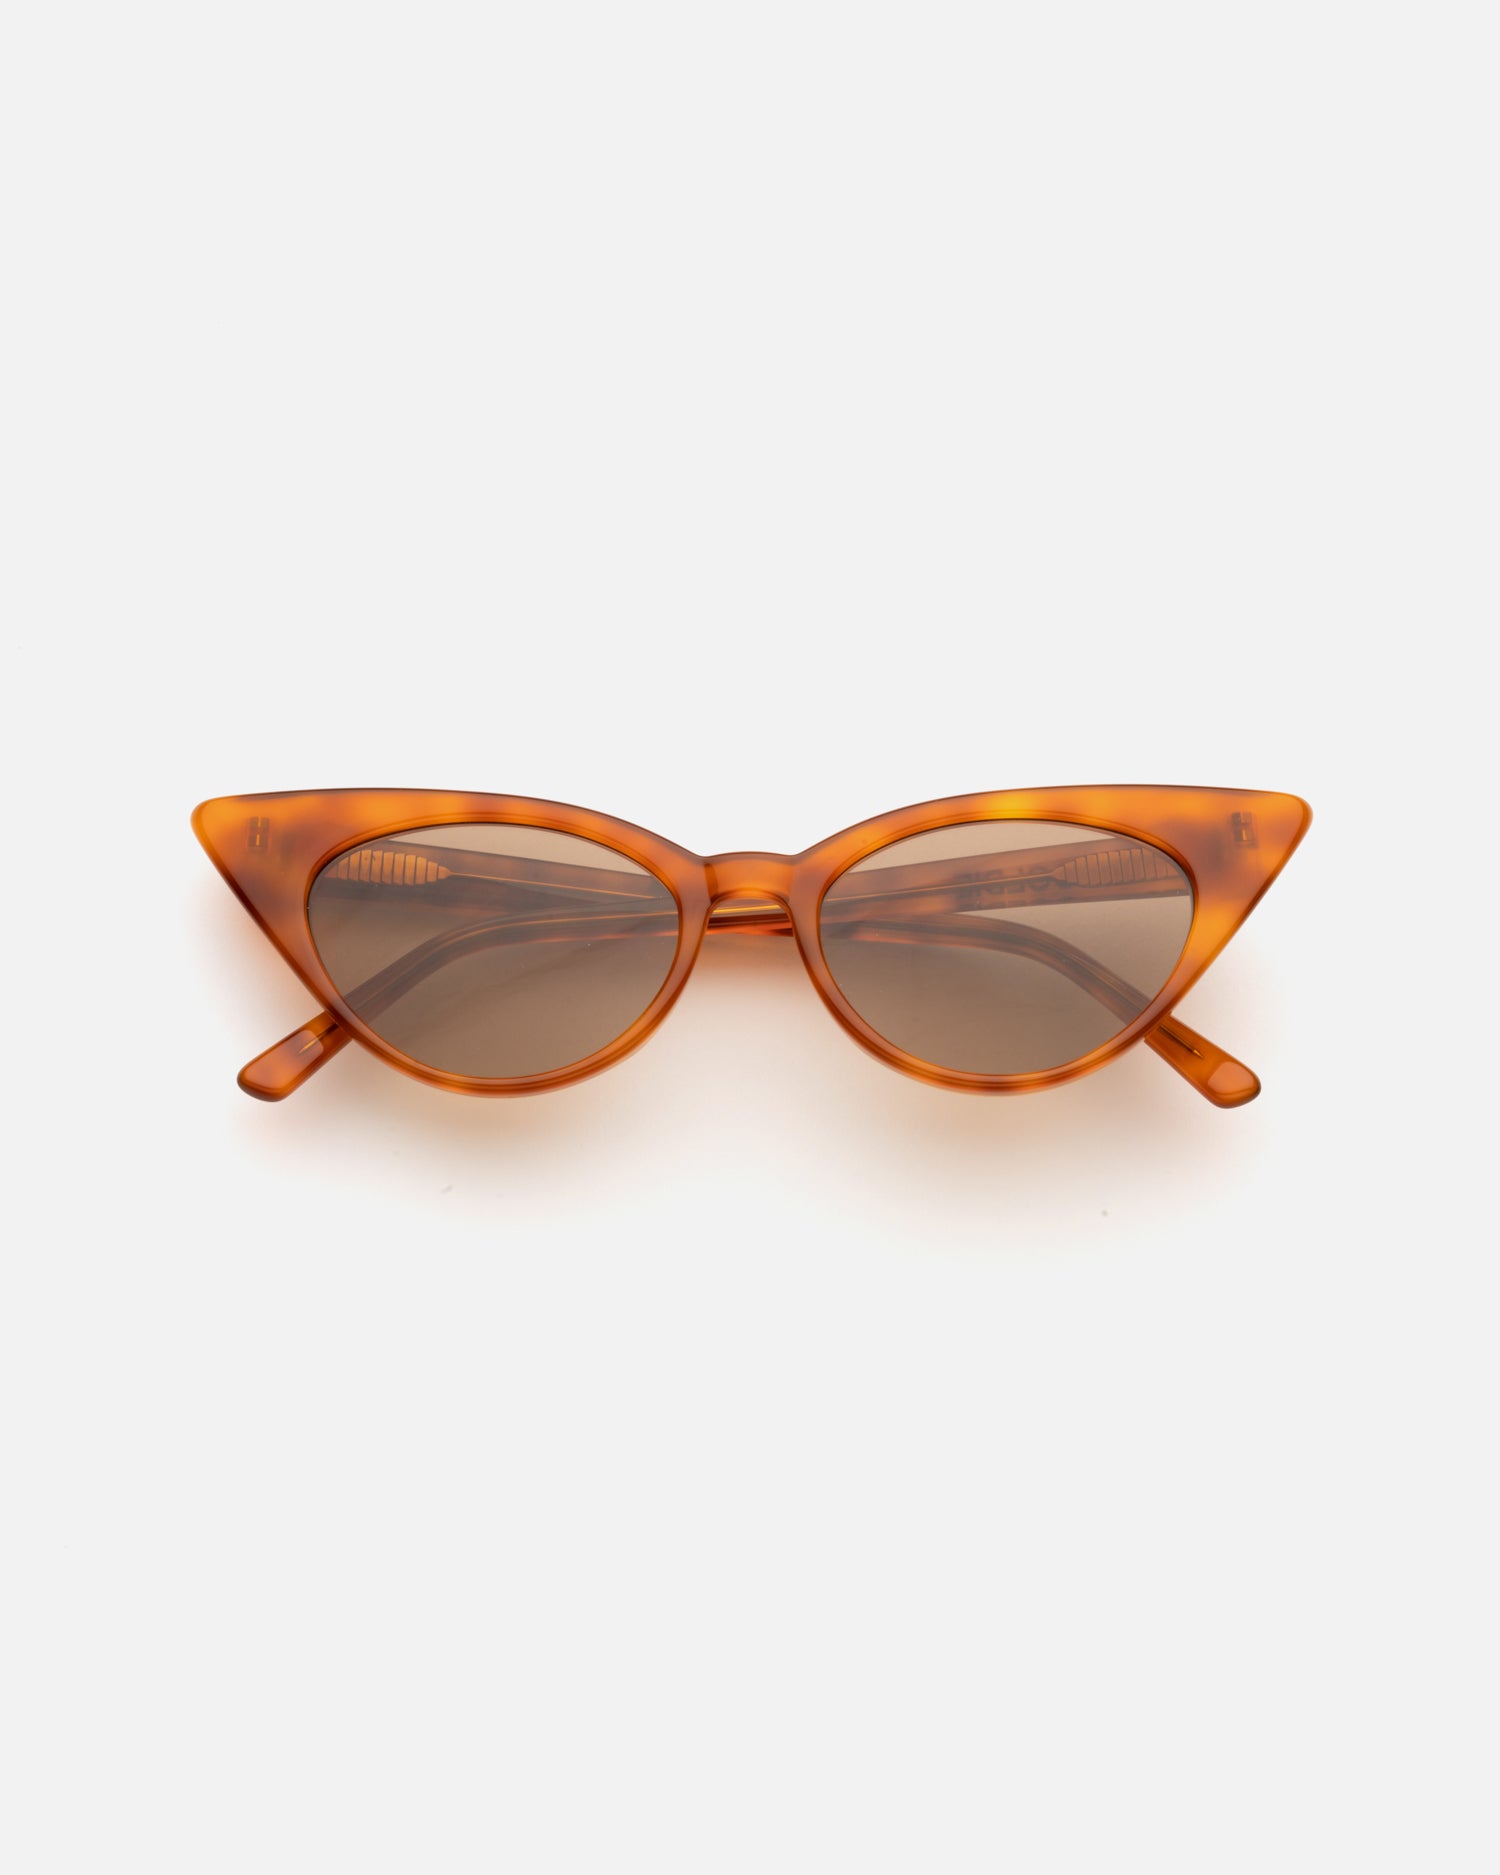 Lu Goldie — 'Brigitte' sunglasses in Maple